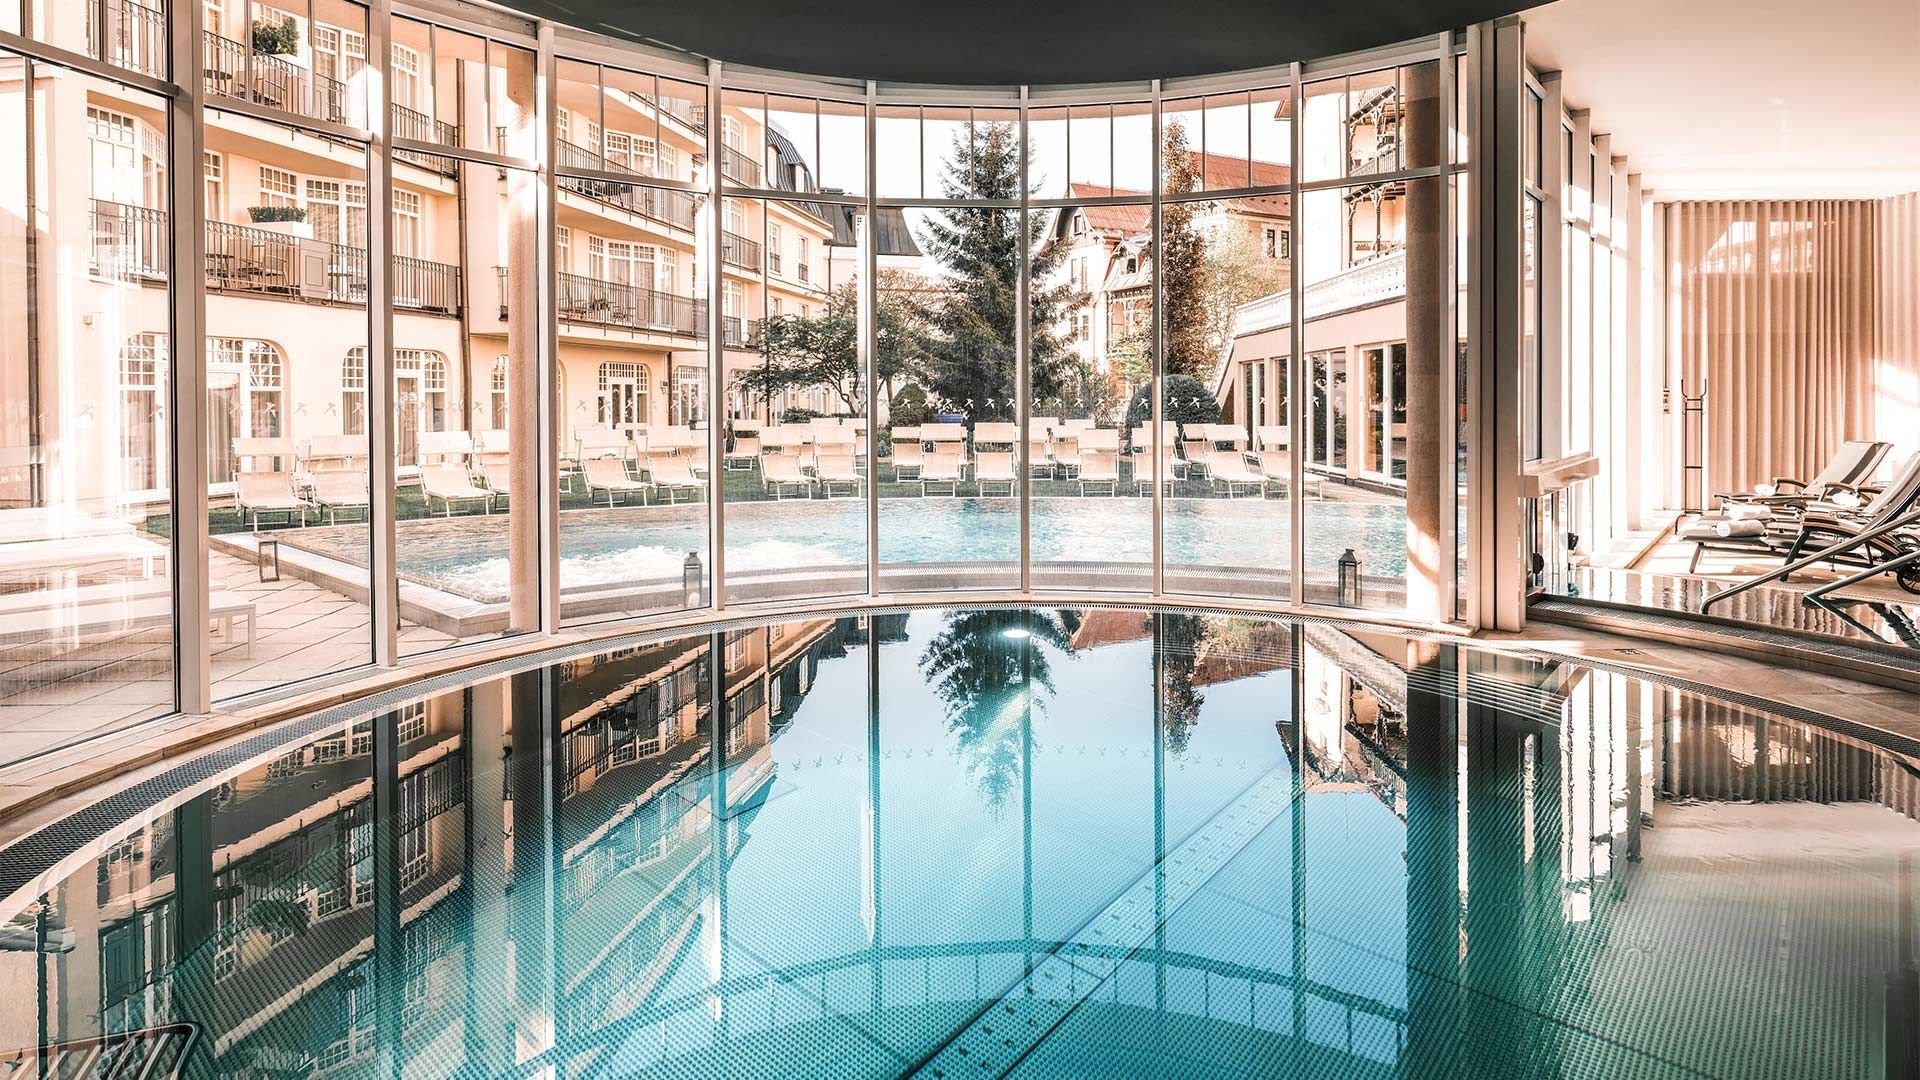 The indoor pool area at Falkensteiner Hotels